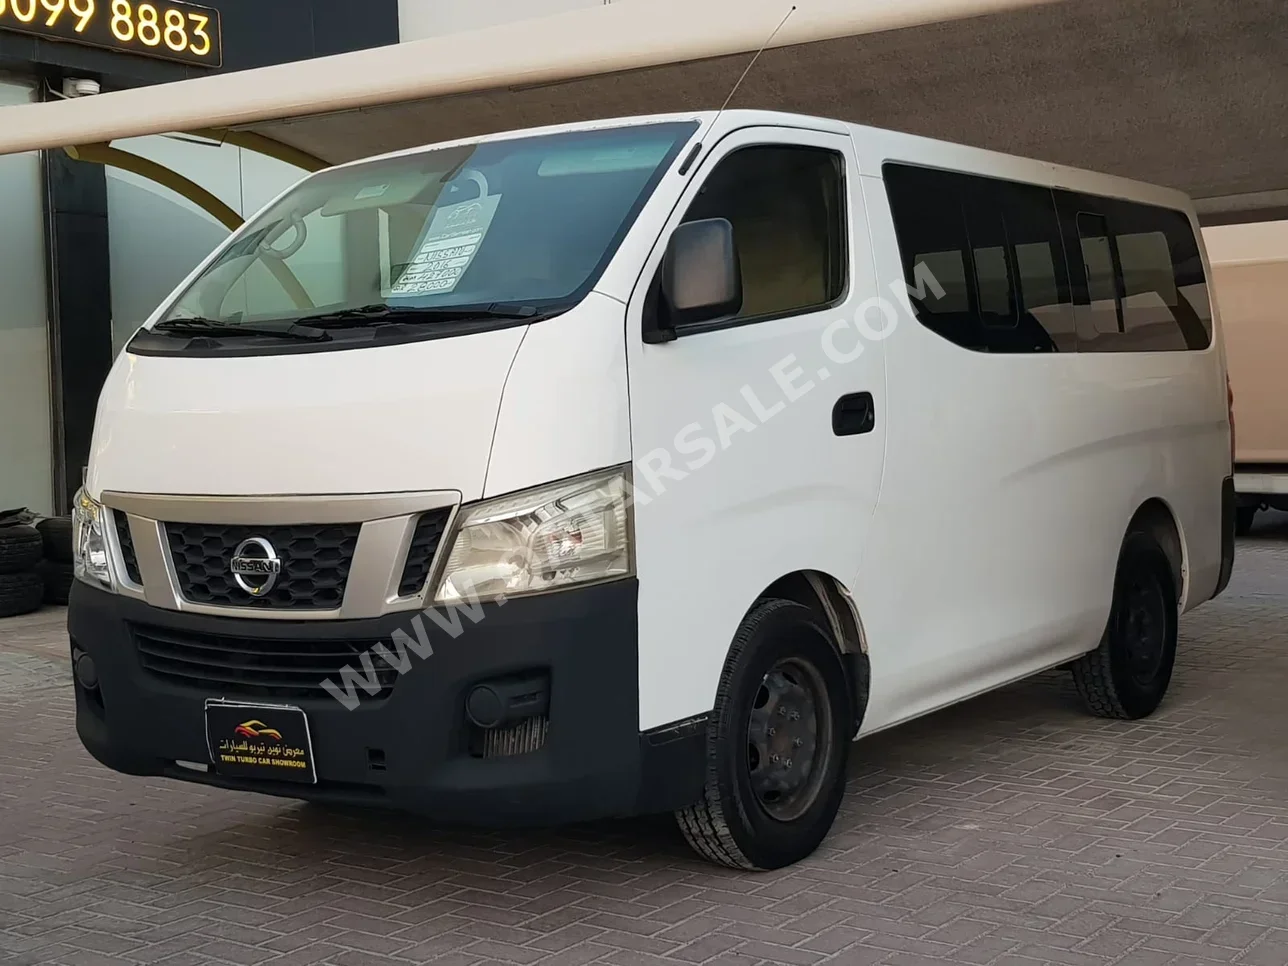 Nissan  Urvan  NV350  2016  Automatic  427,000 Km  4 Cylinder  Rear Wheel Drive (RWD)  Van / Bus  White